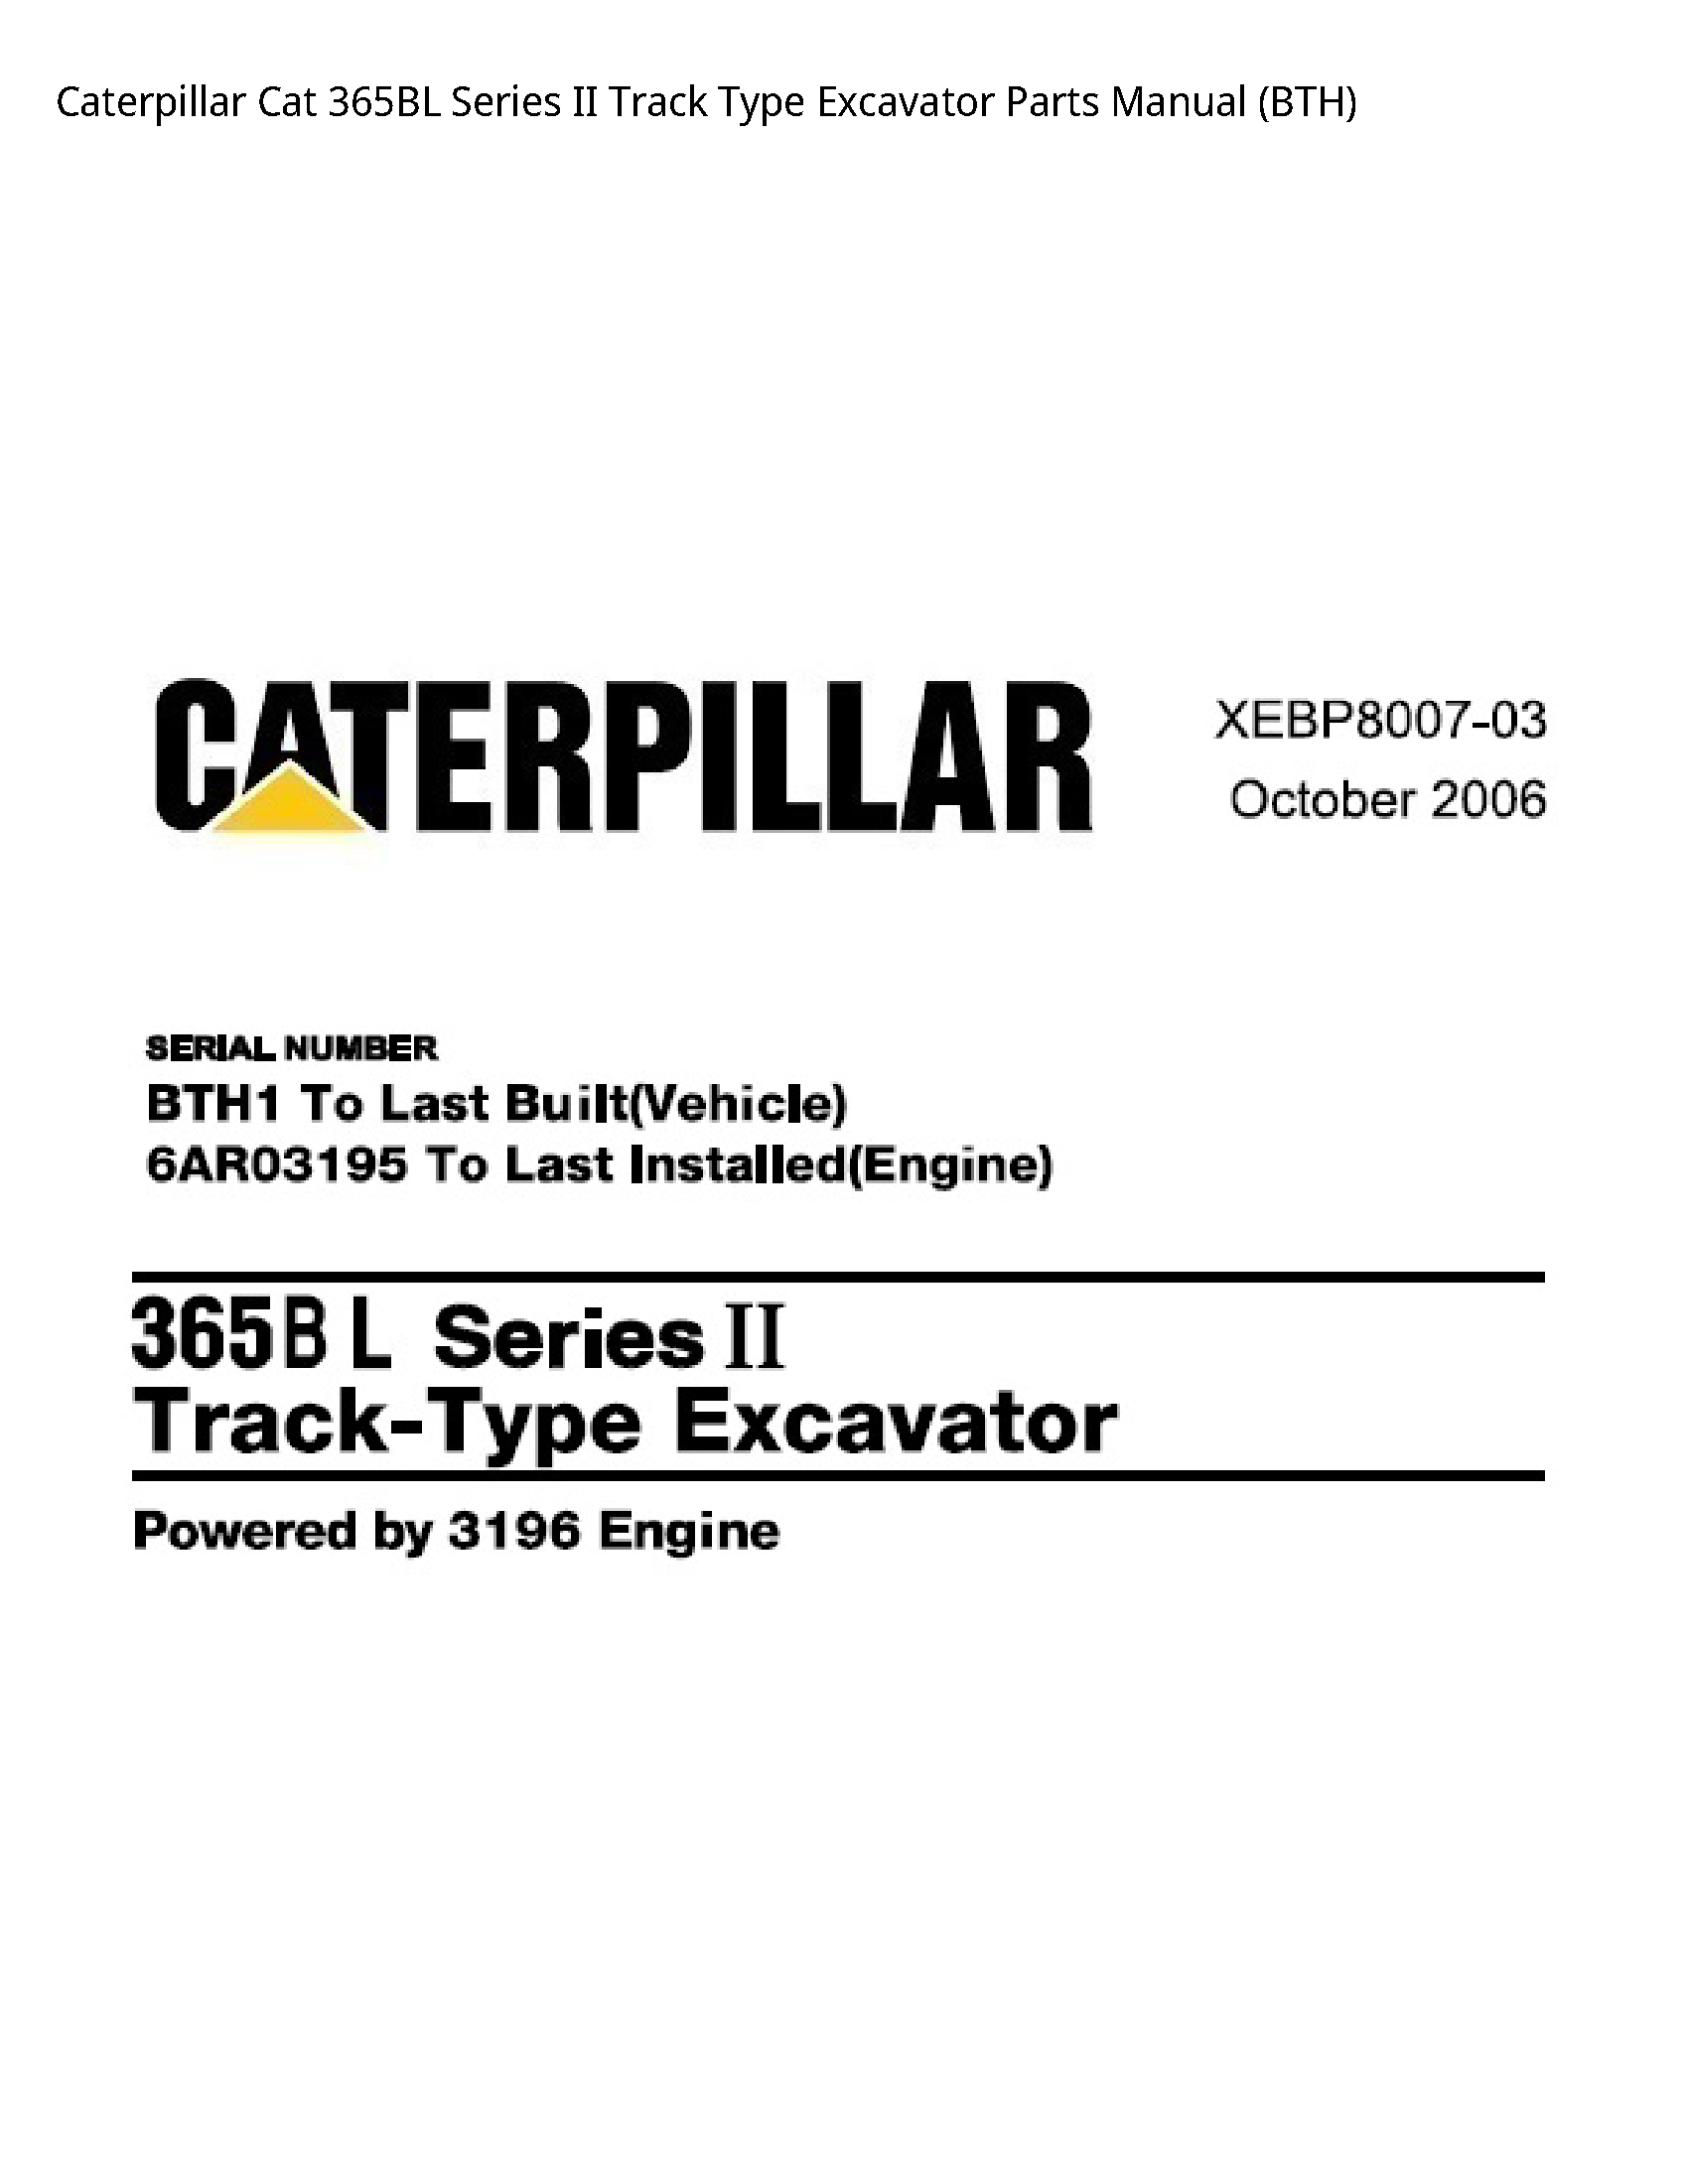 Caterpillar 365BL Cat Series II Track Type Excavator Parts manual